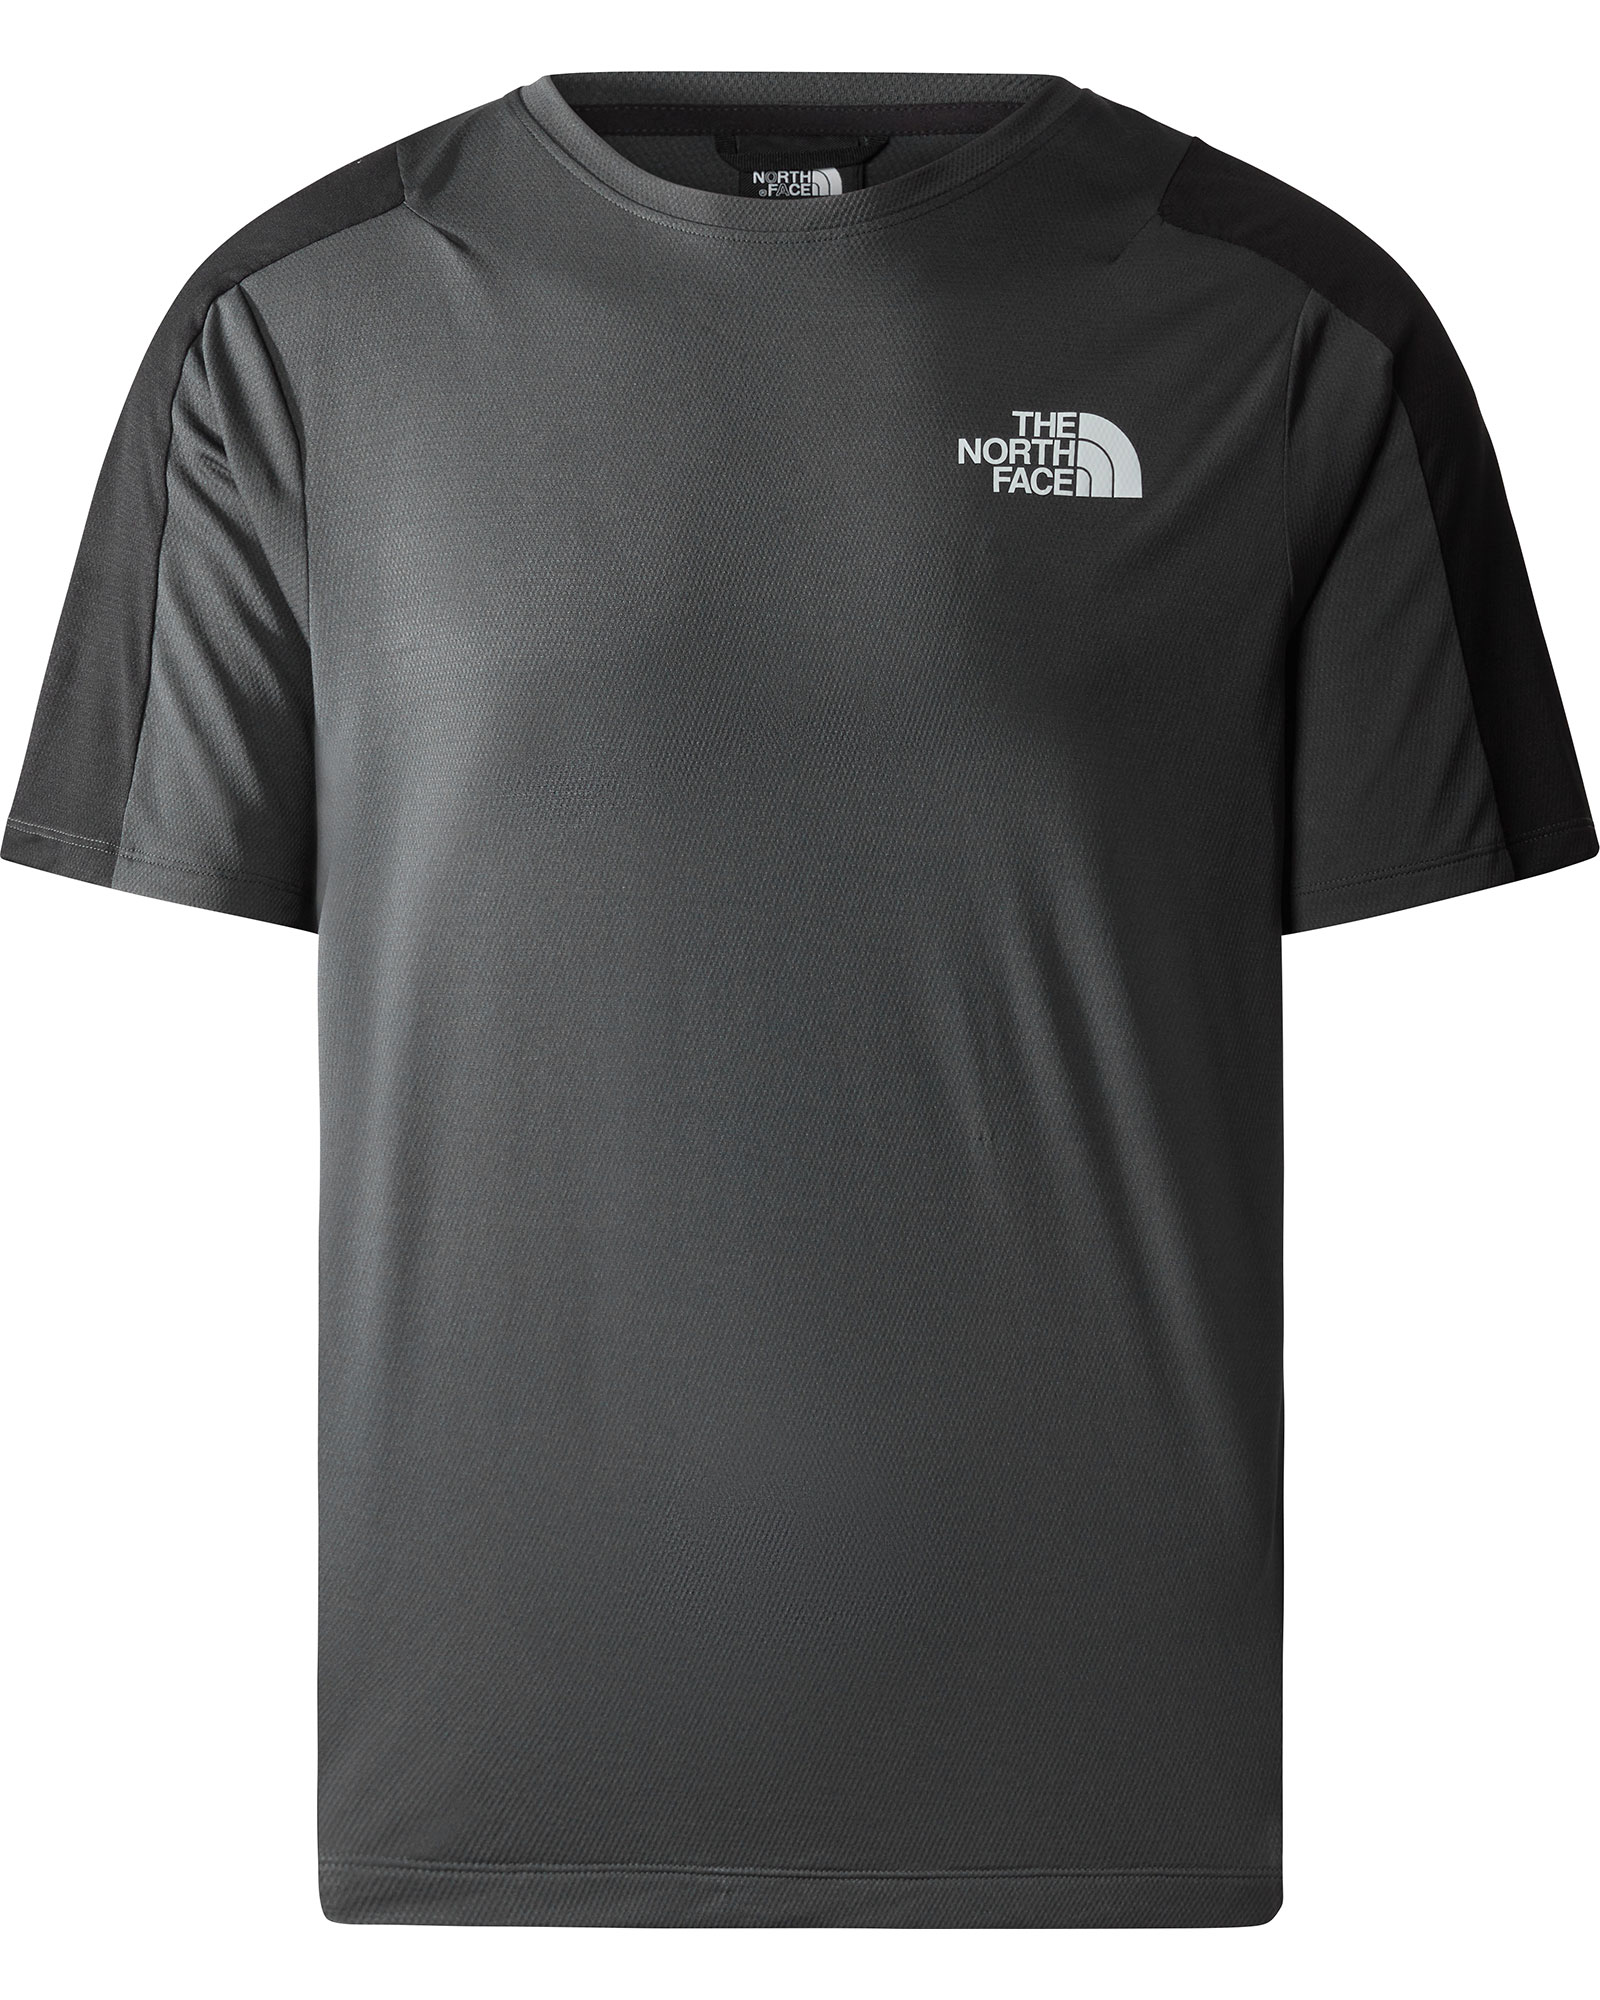 The North Face Men’s MA T Shirt - Asphalt Grey-TNF Black XS